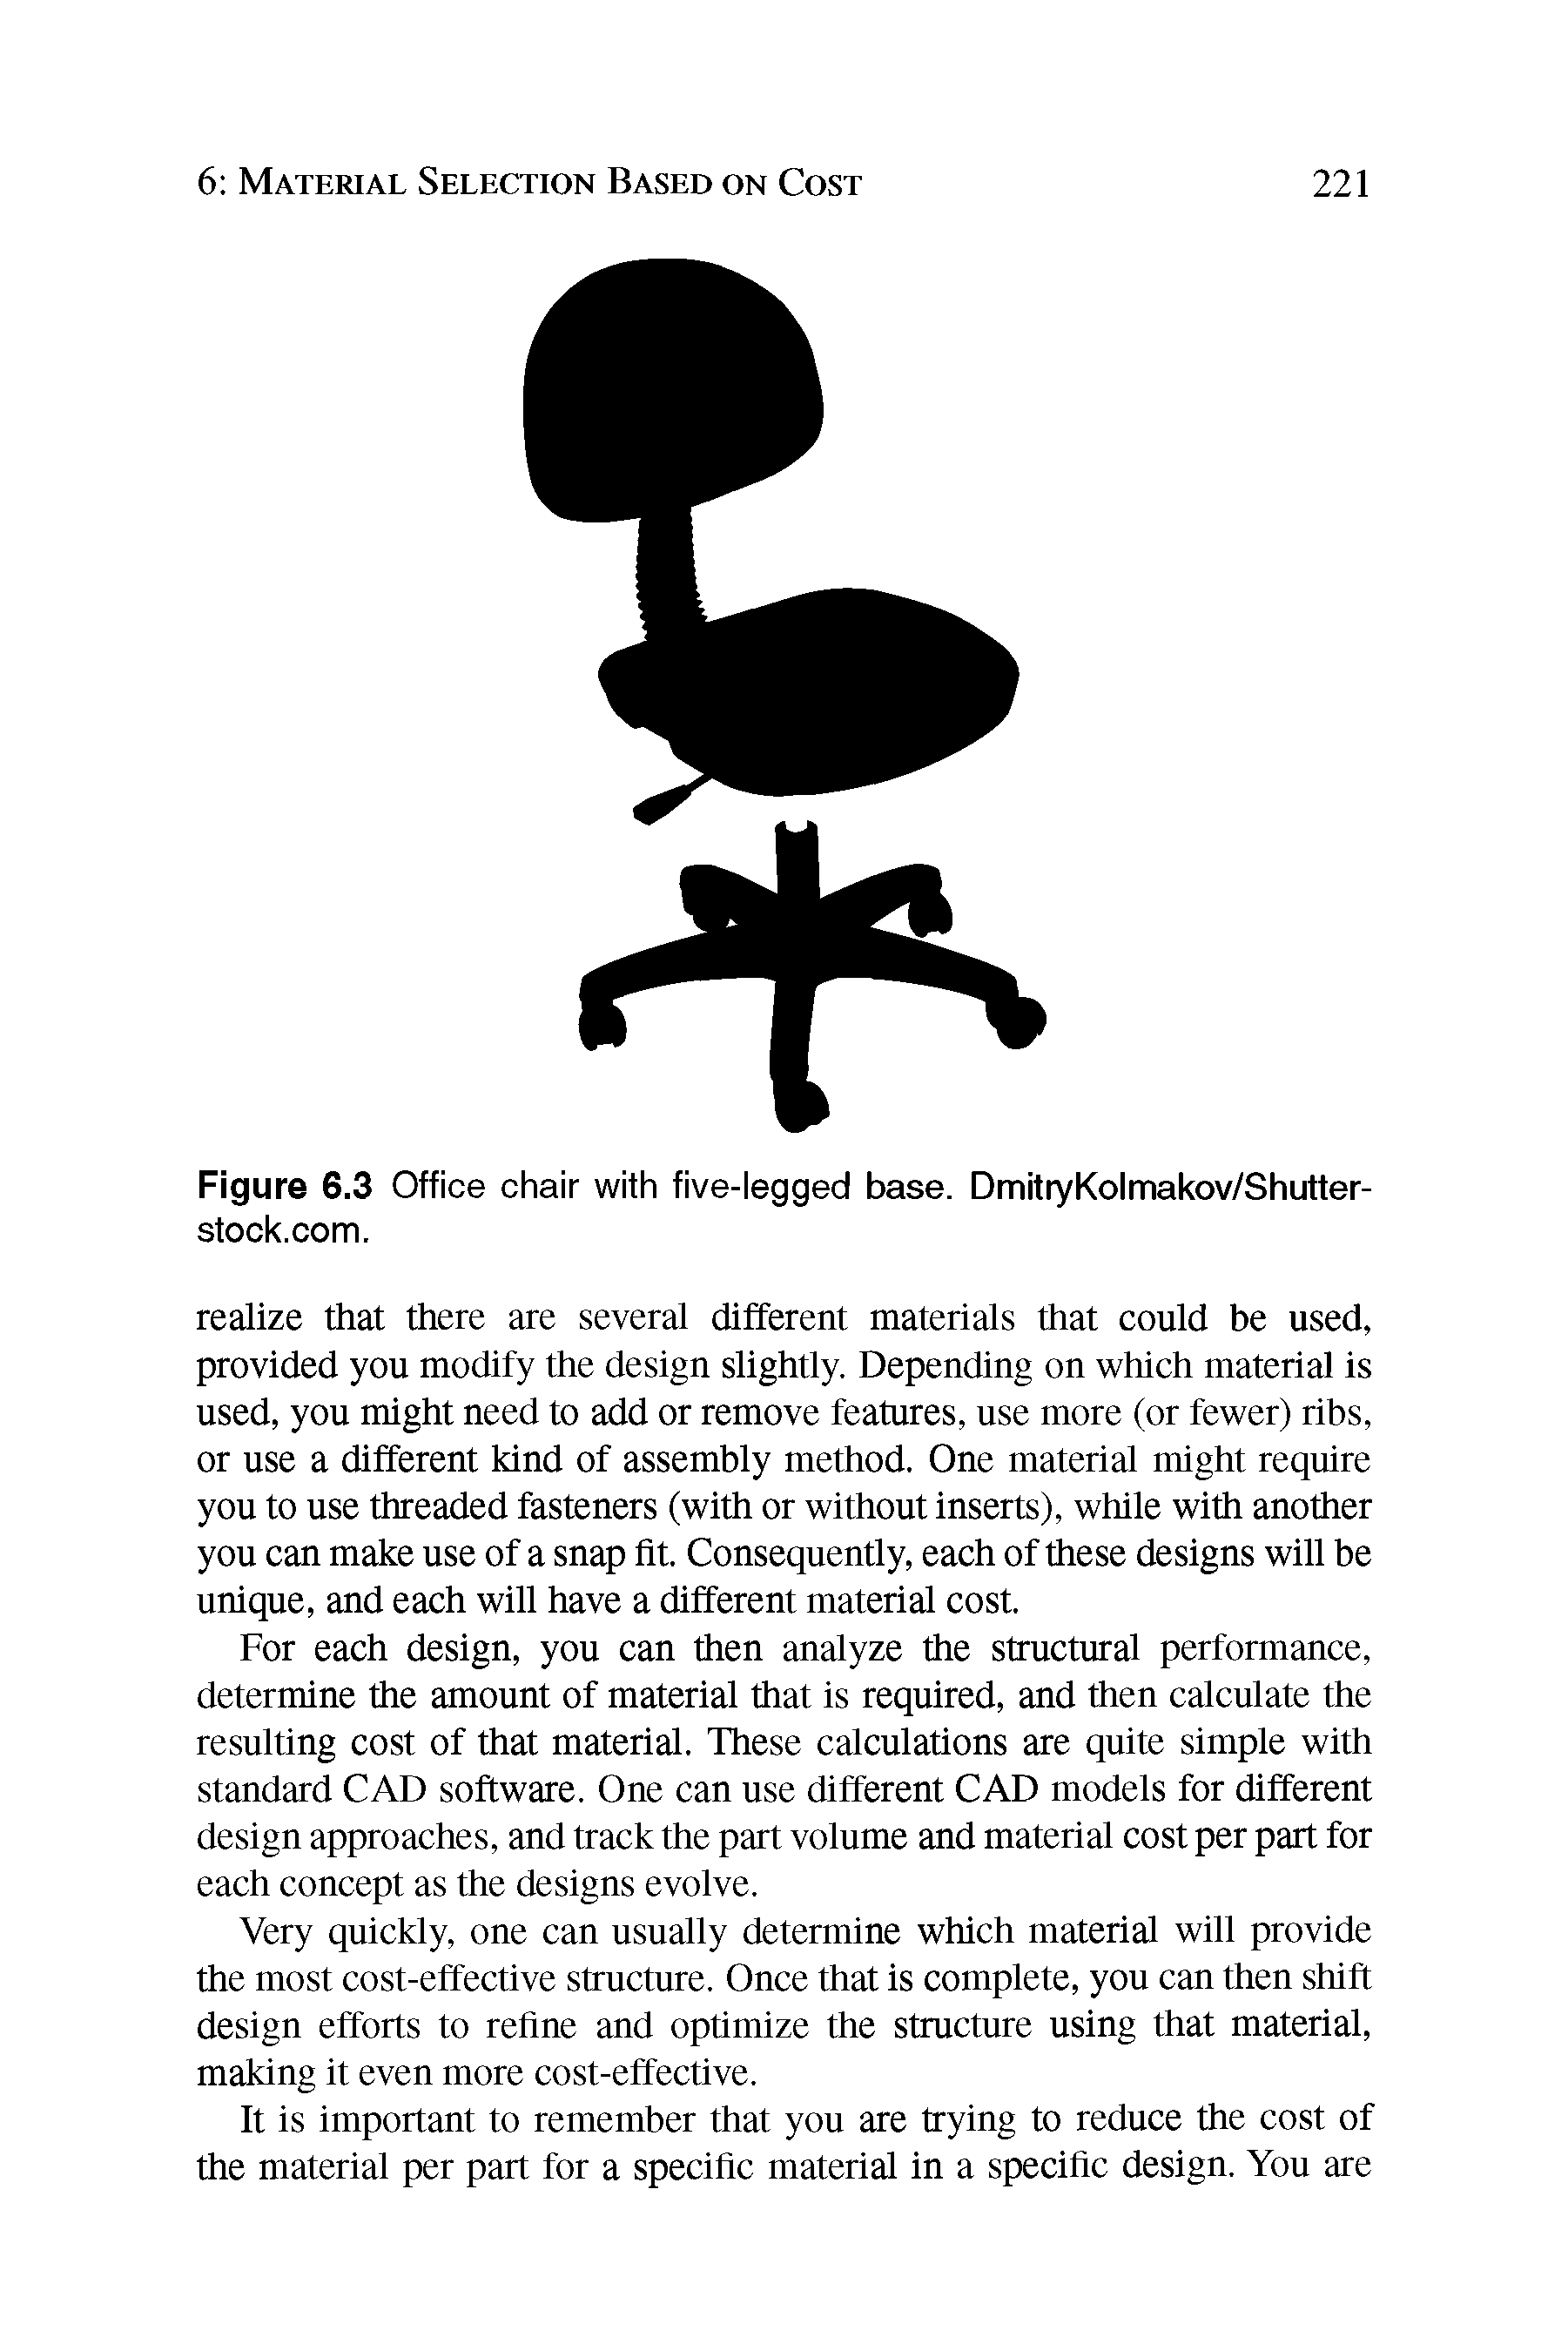 Figure 6.3 Office chair with five-legged base. DmitryKolmakov/Shutter-stock.com.